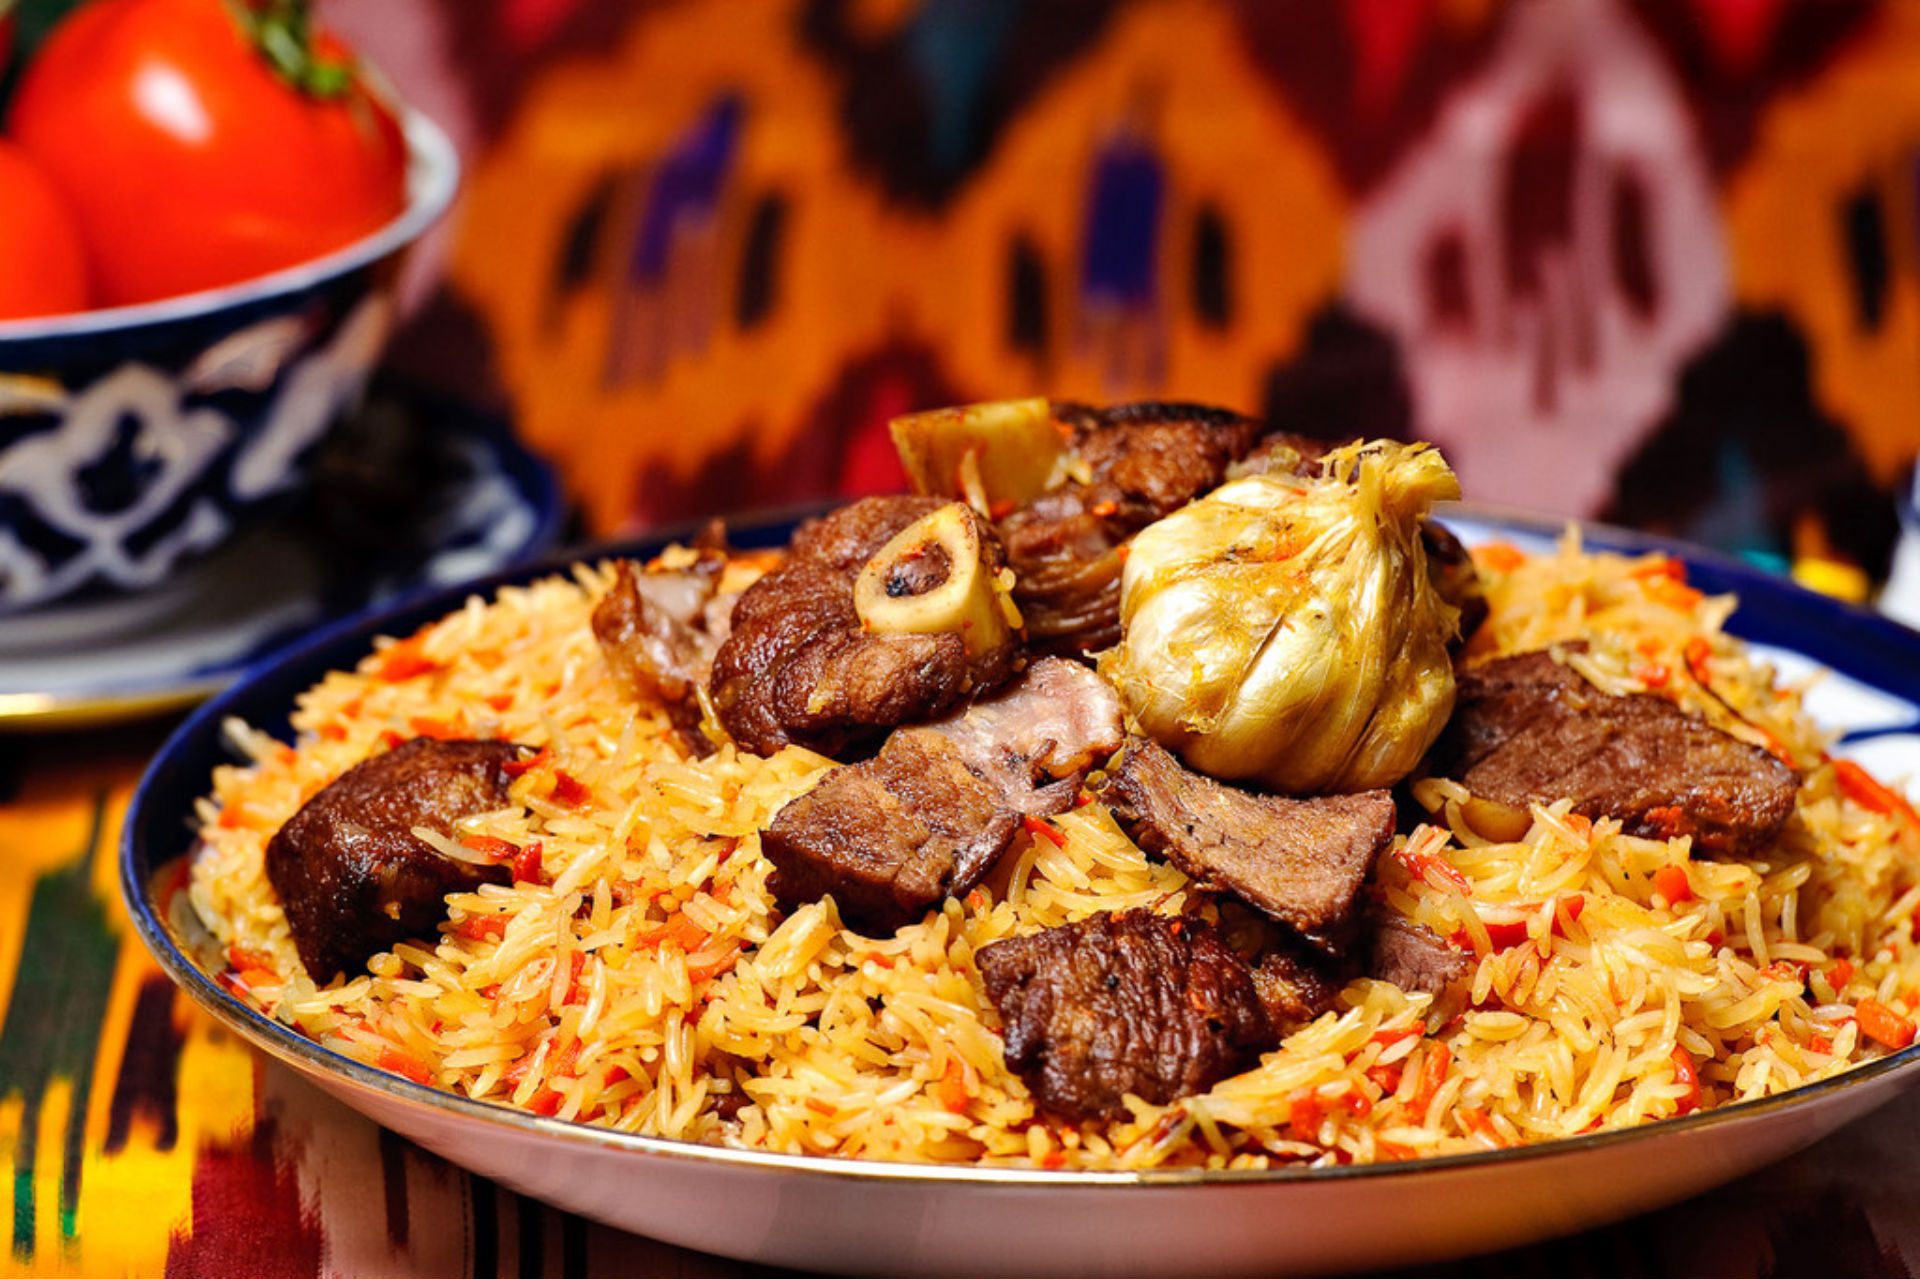 Food___Meat_and_barbecue_____Uzbekistan_